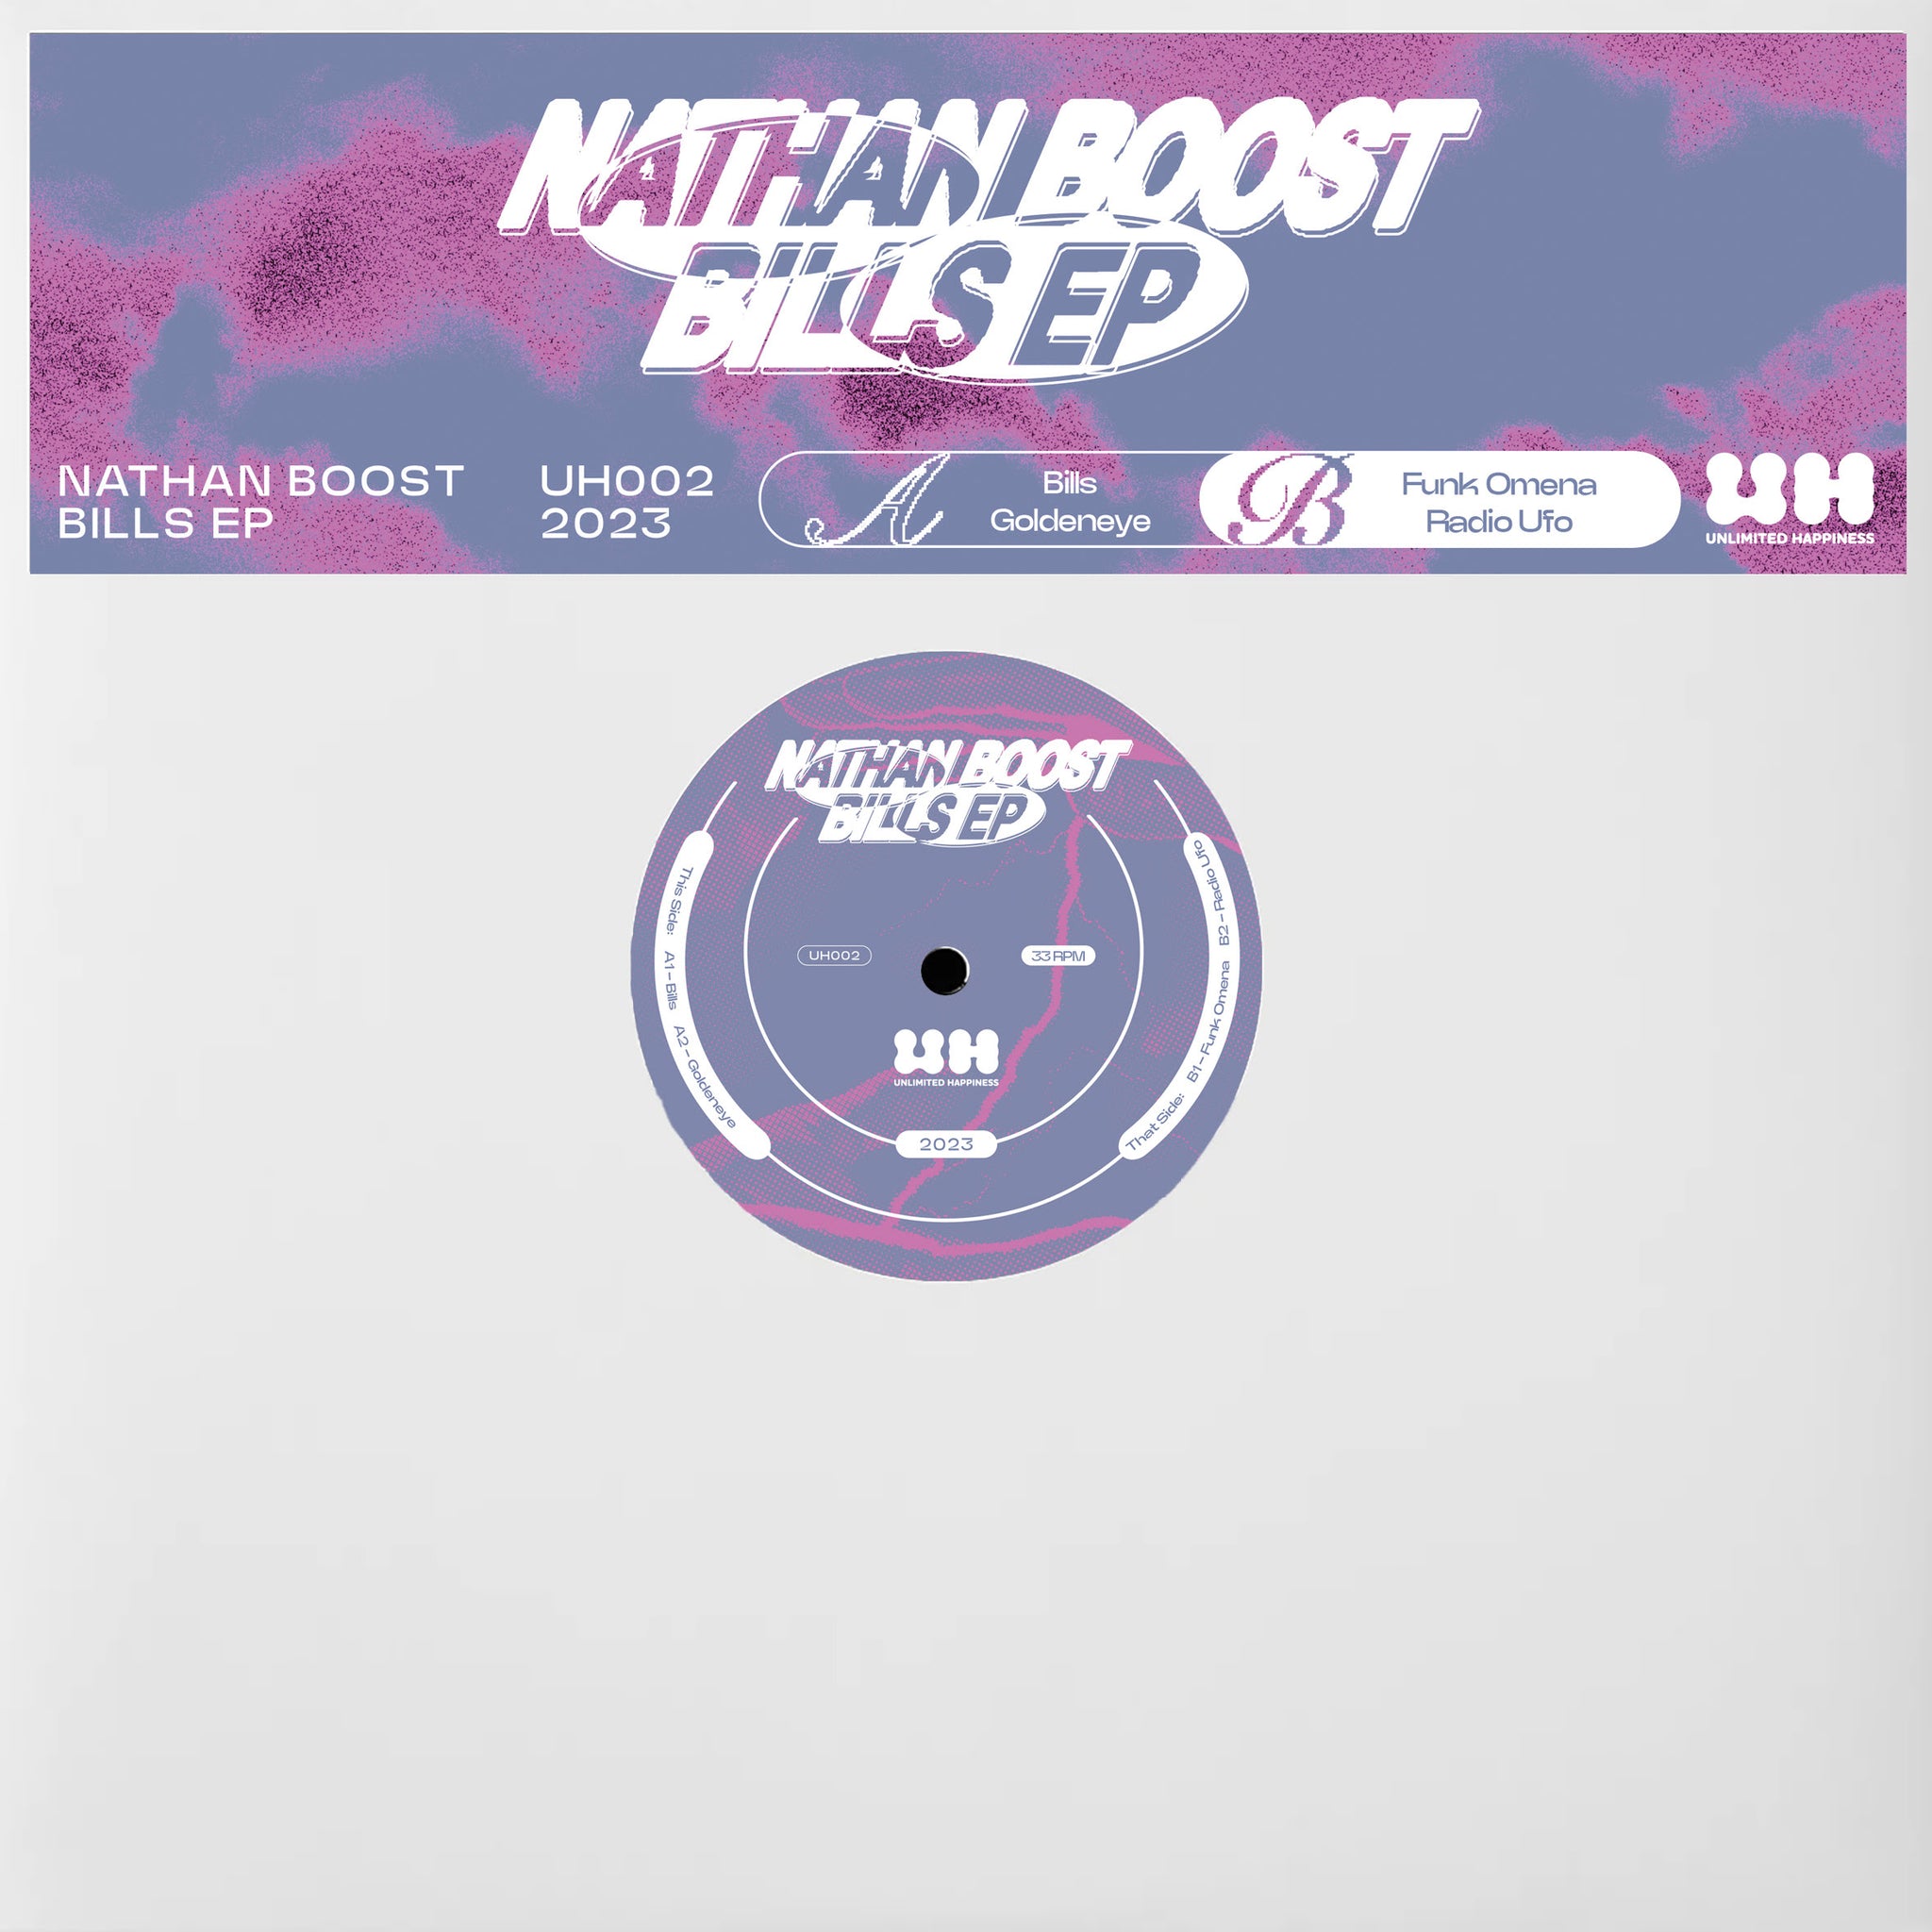 Nathan Boost - Bills EP